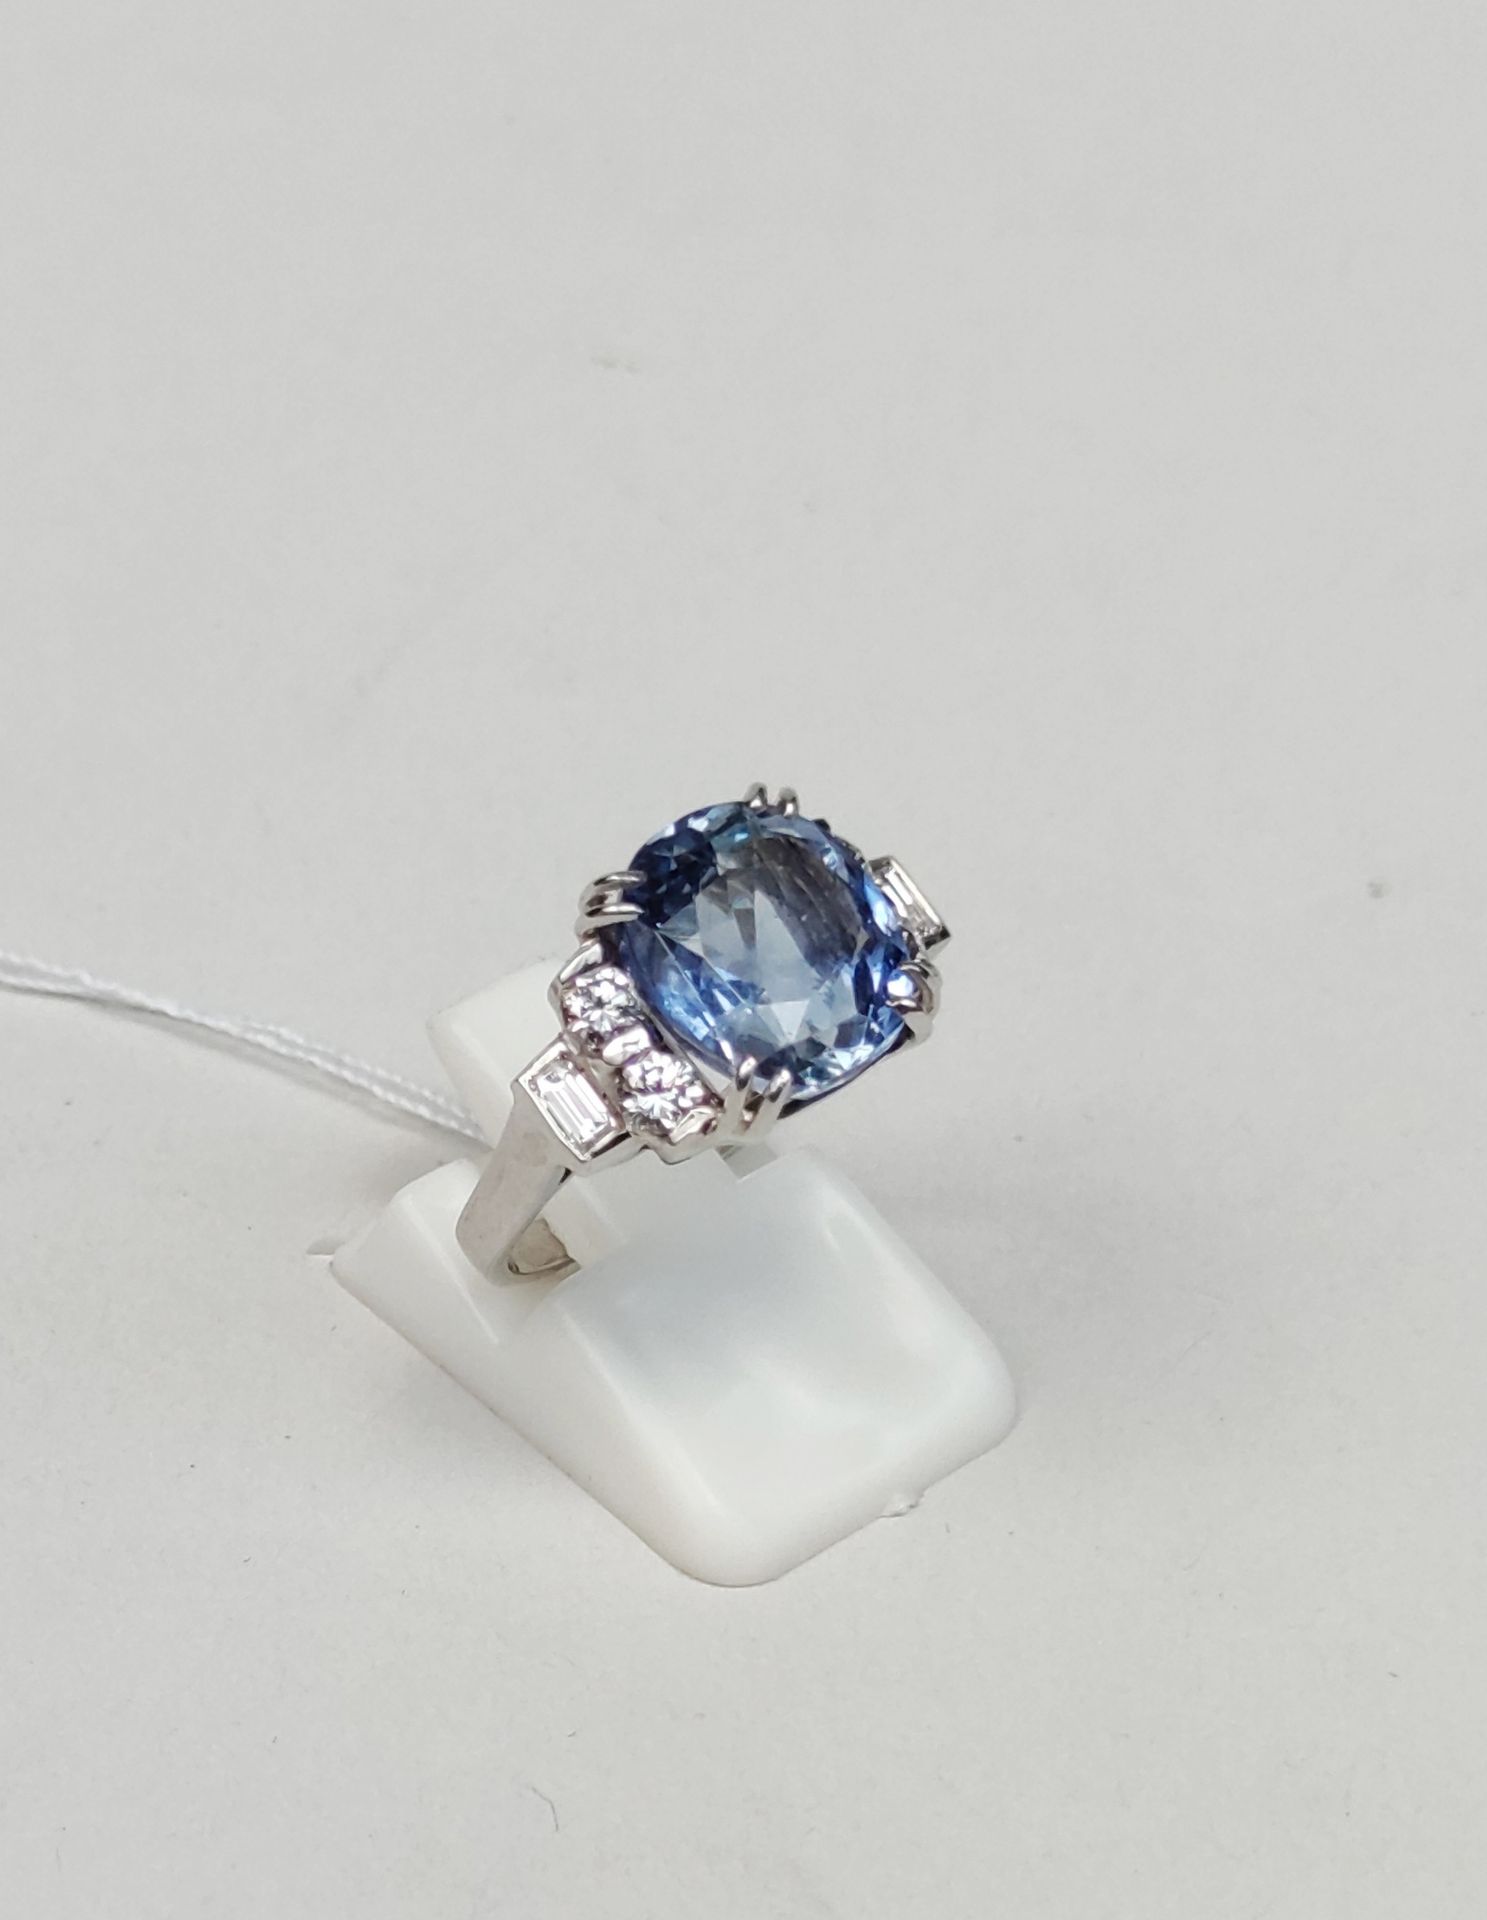 Null 
750°/00白金戒指，镶嵌一颗6.40克拉的天然锡兰蓝宝石

手指大小：52，毛重：5.80克

凭借其IGI证书